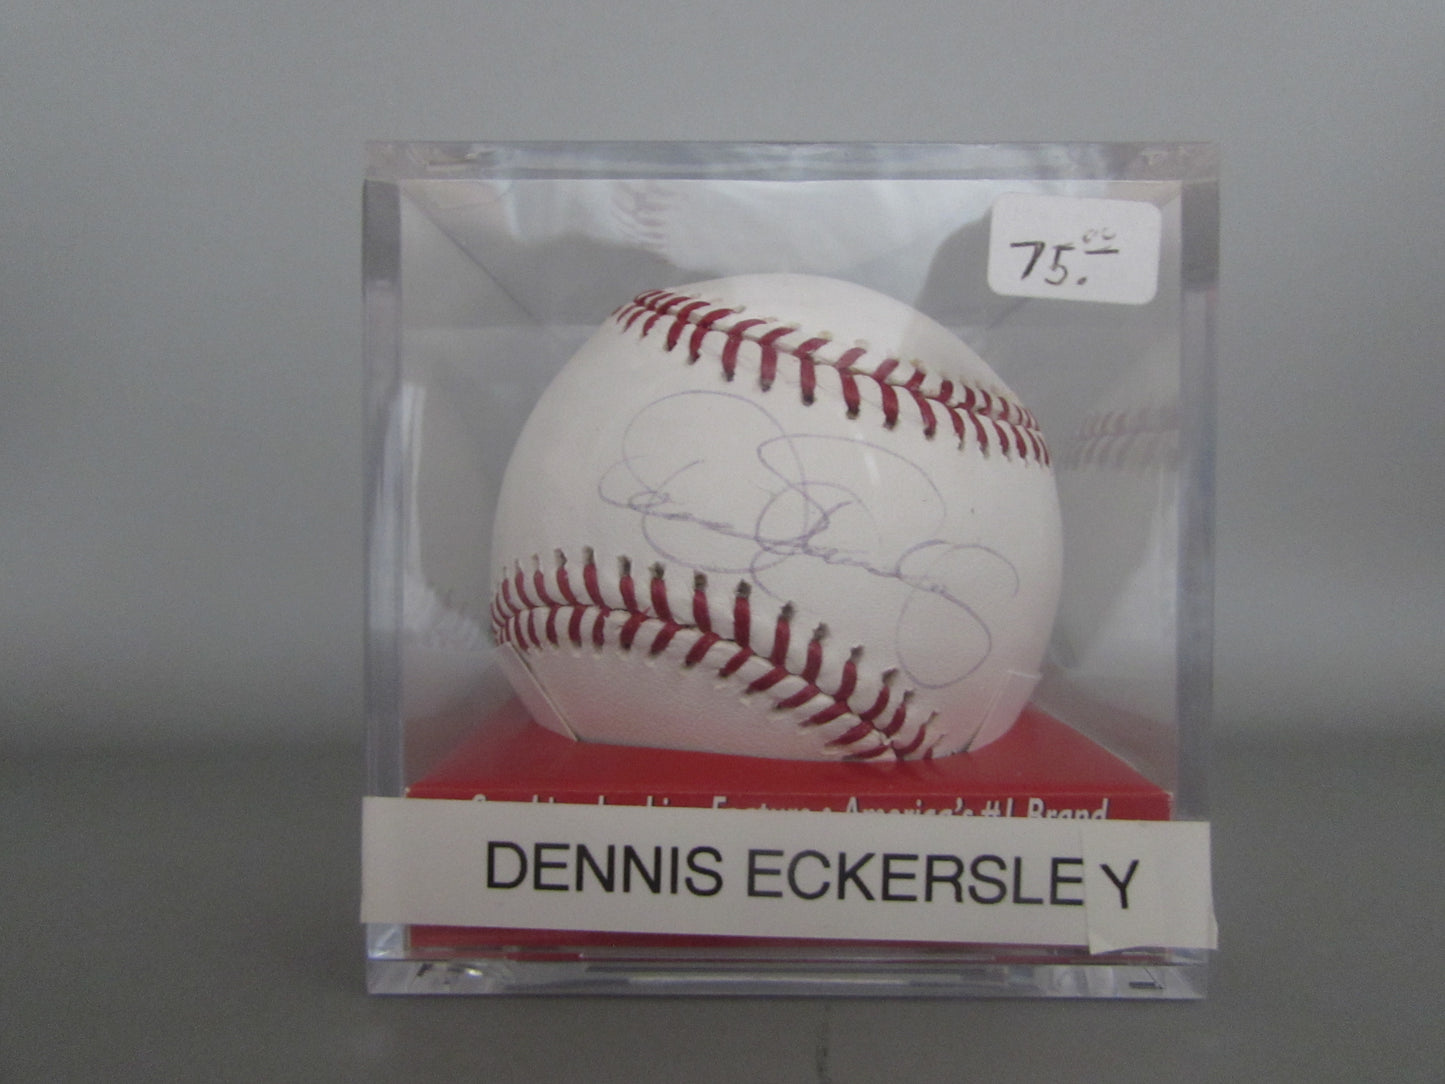 Dennis Eckersley signed baseball